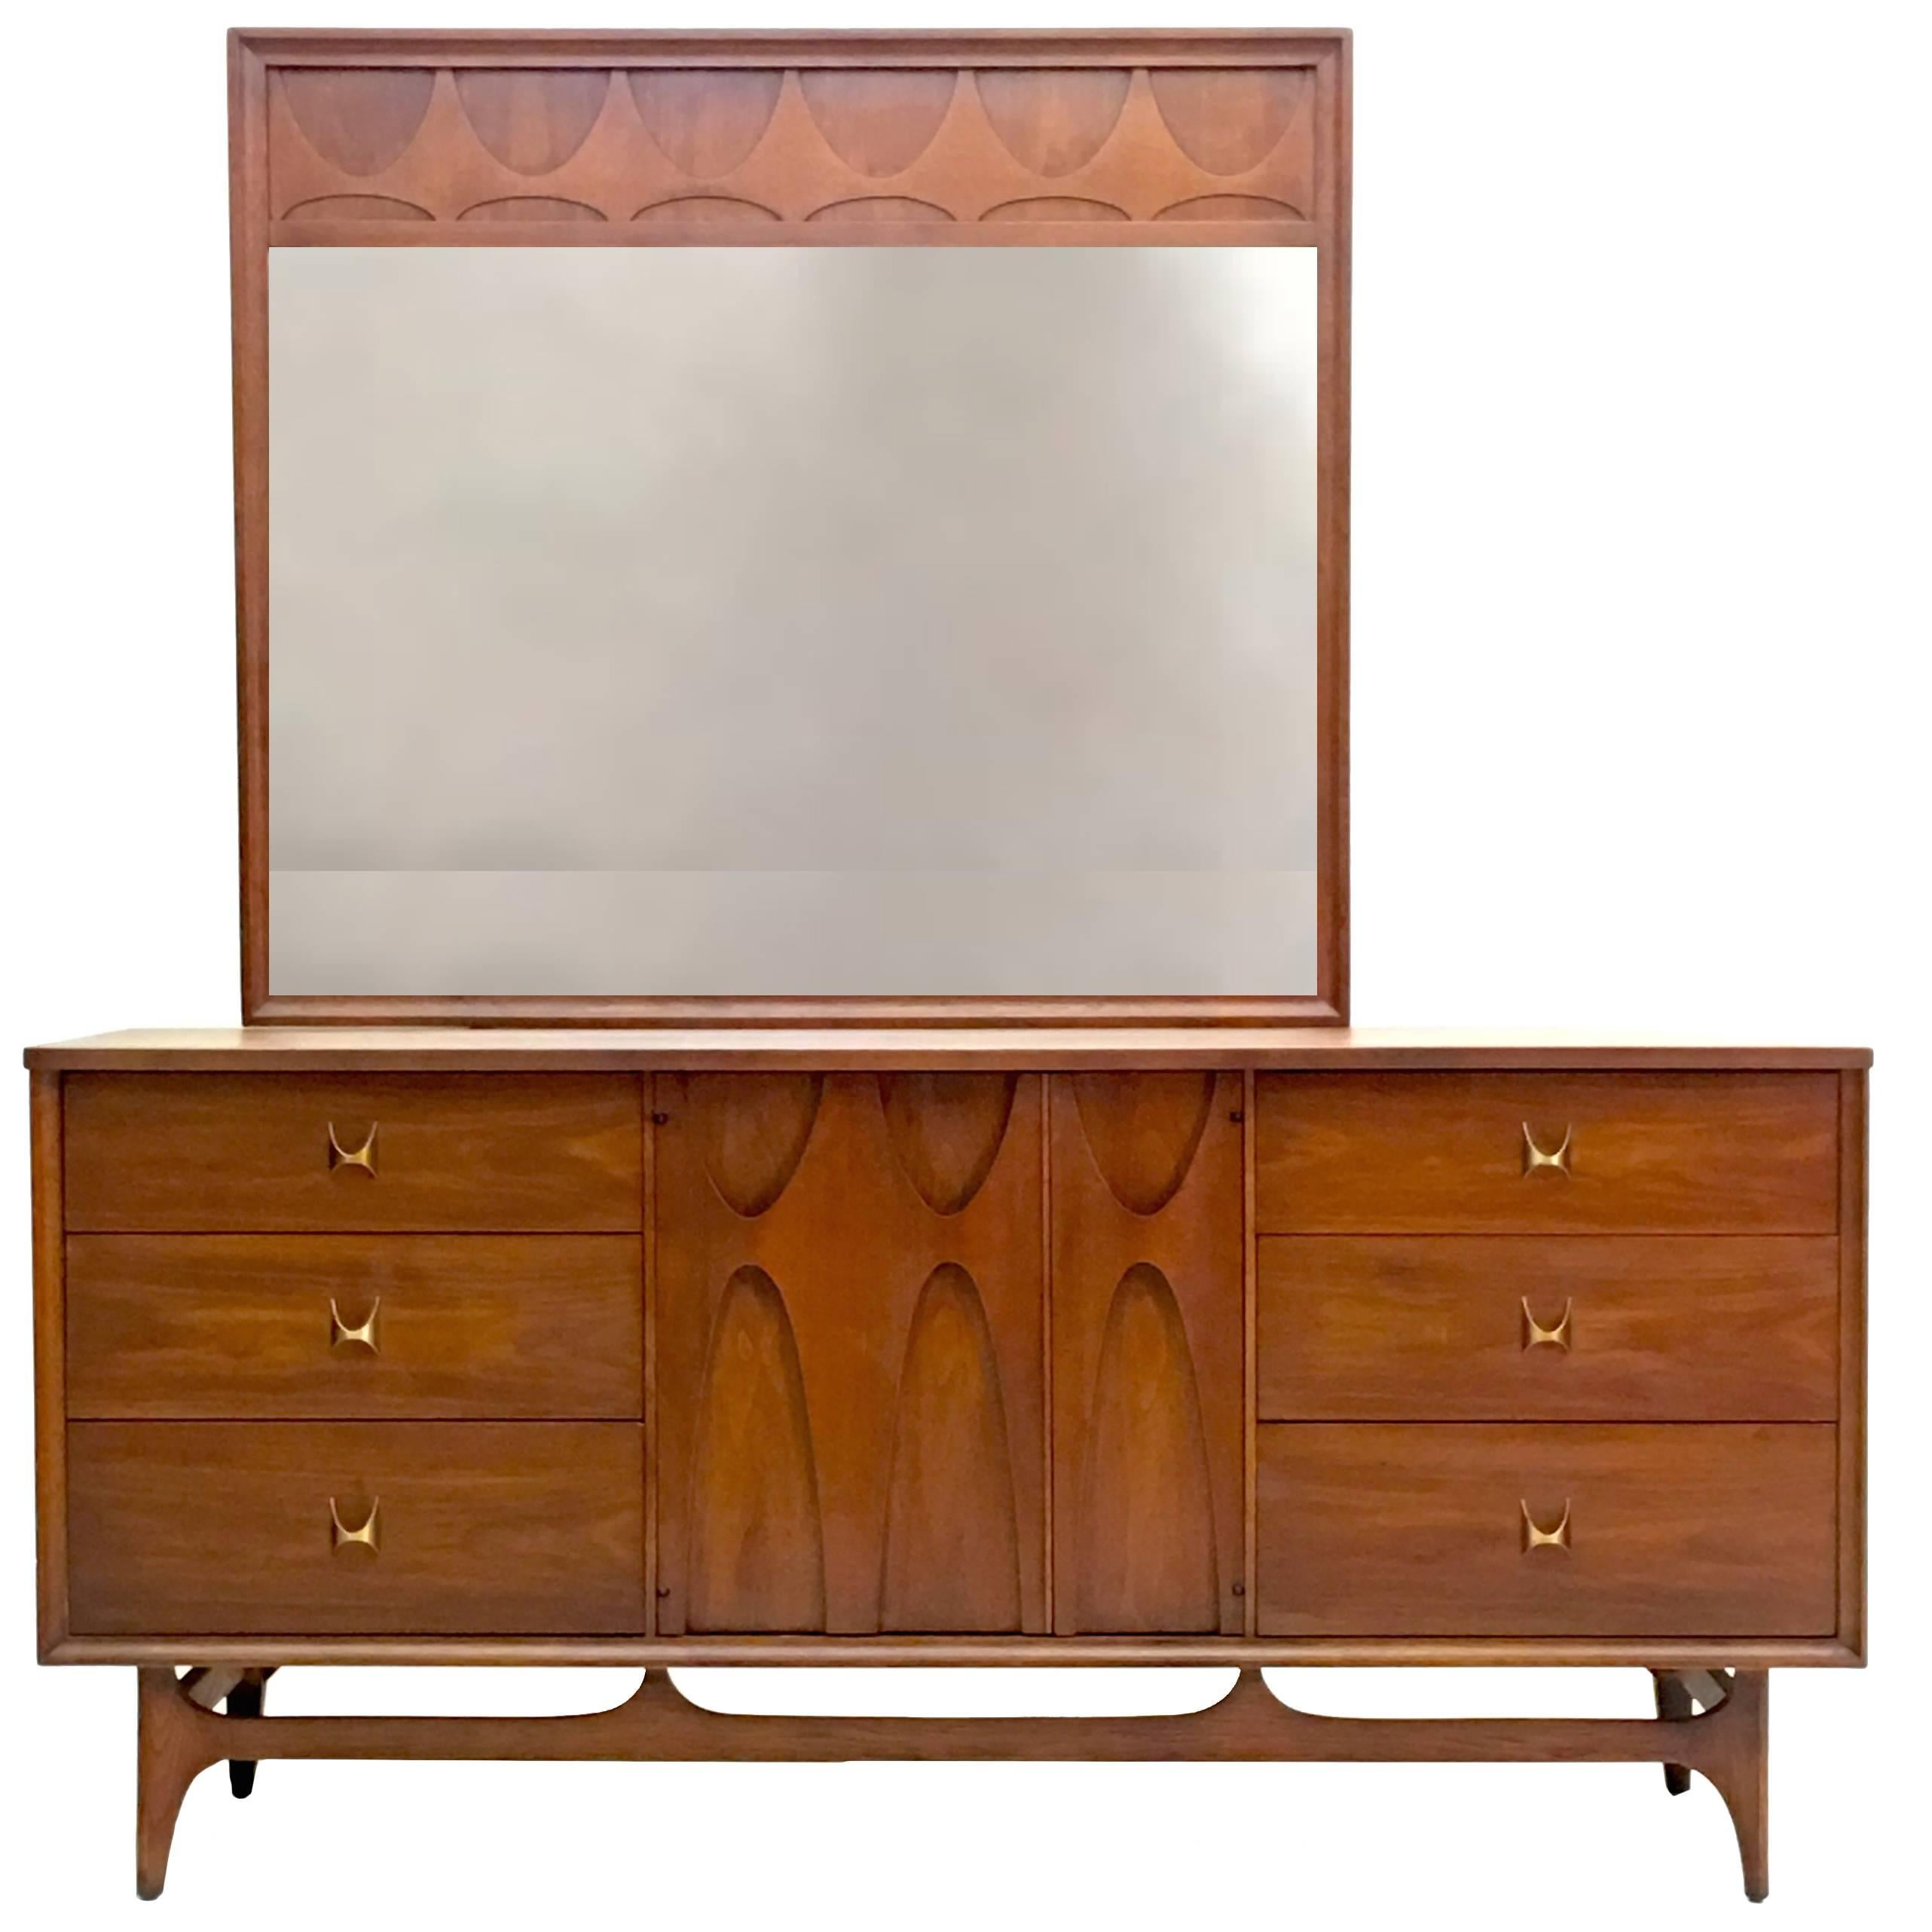 Triple Dresser and Mirror by Broyhill Brasilia Premier